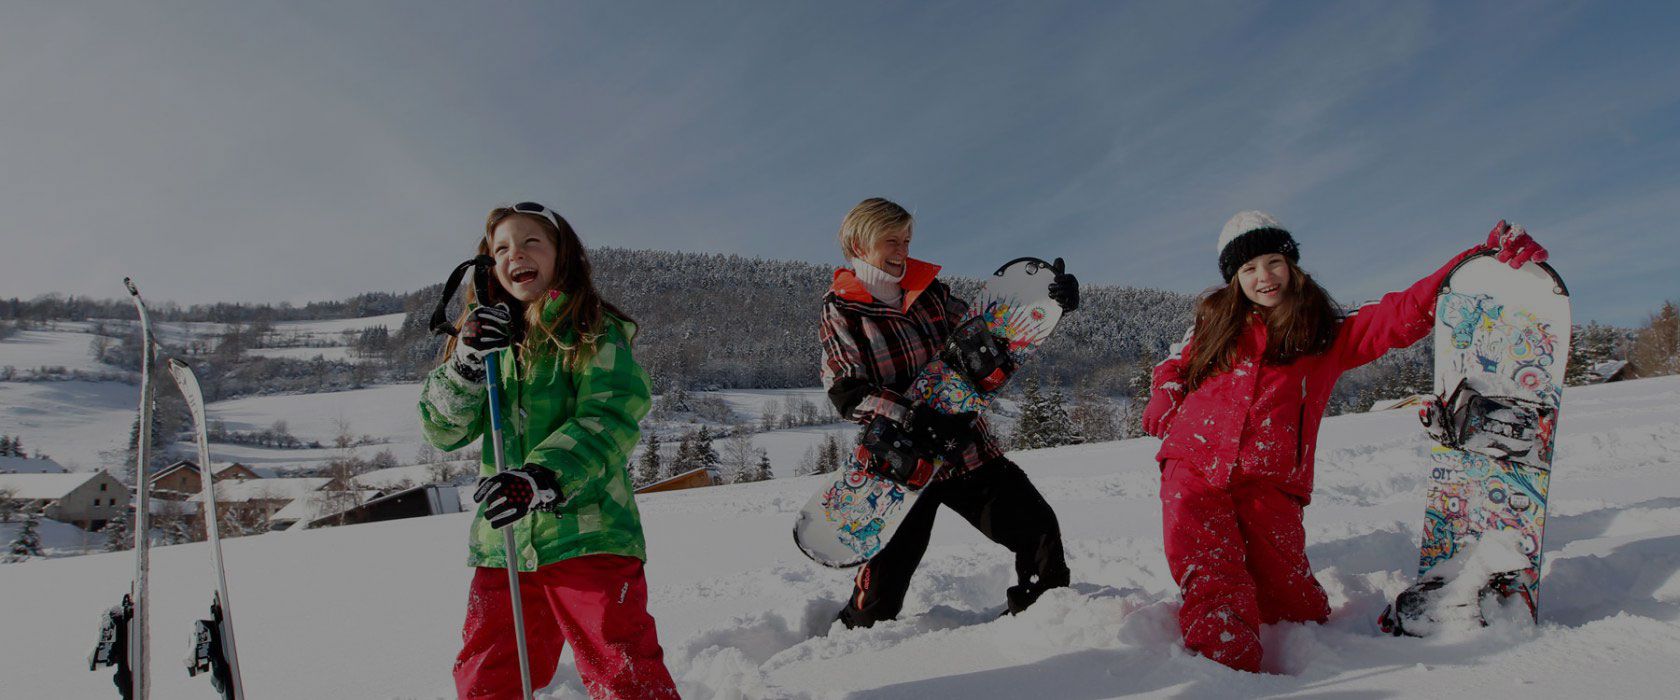 Bien choisir sa station de ski familiale